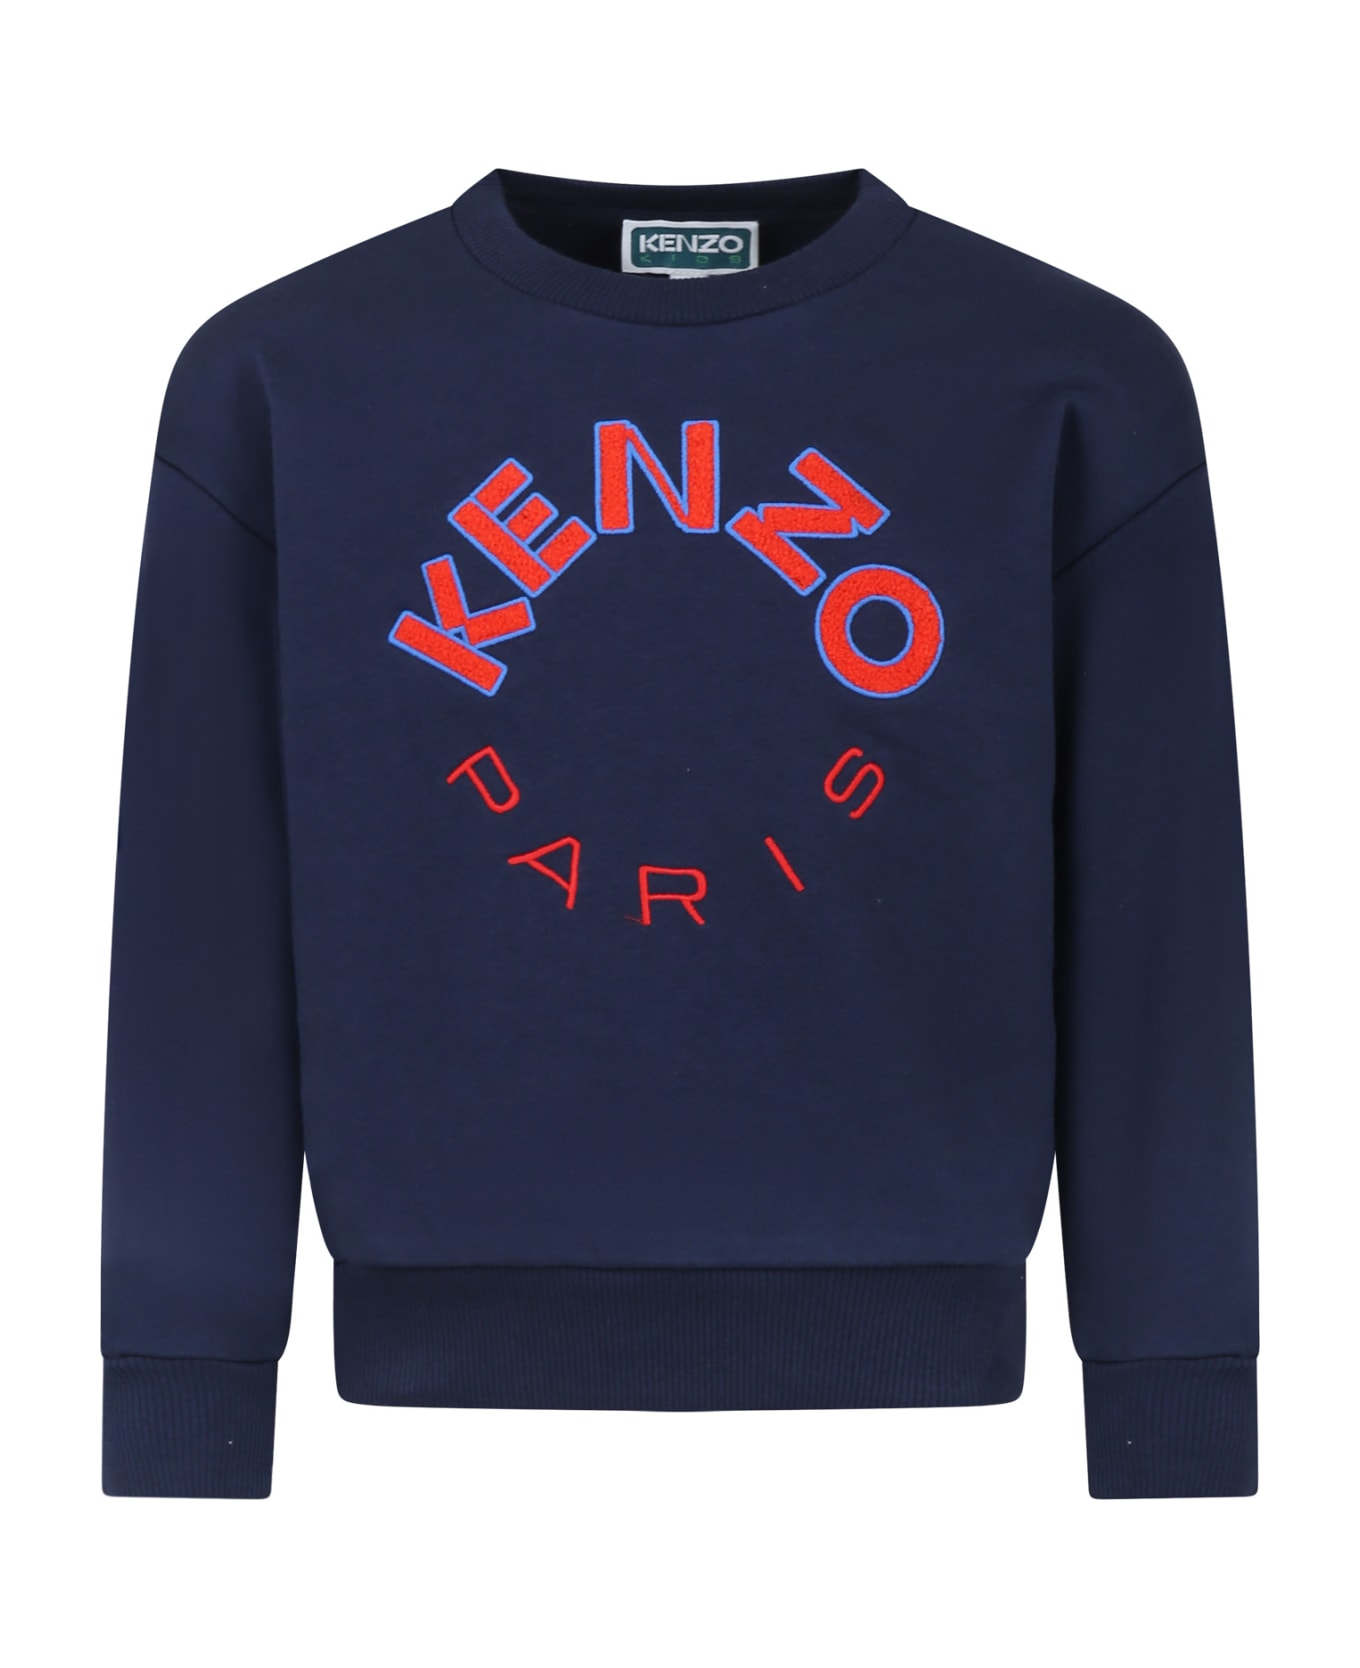 Kenzo Kids Blue Sweatshirt For Boy With Logo - Blue